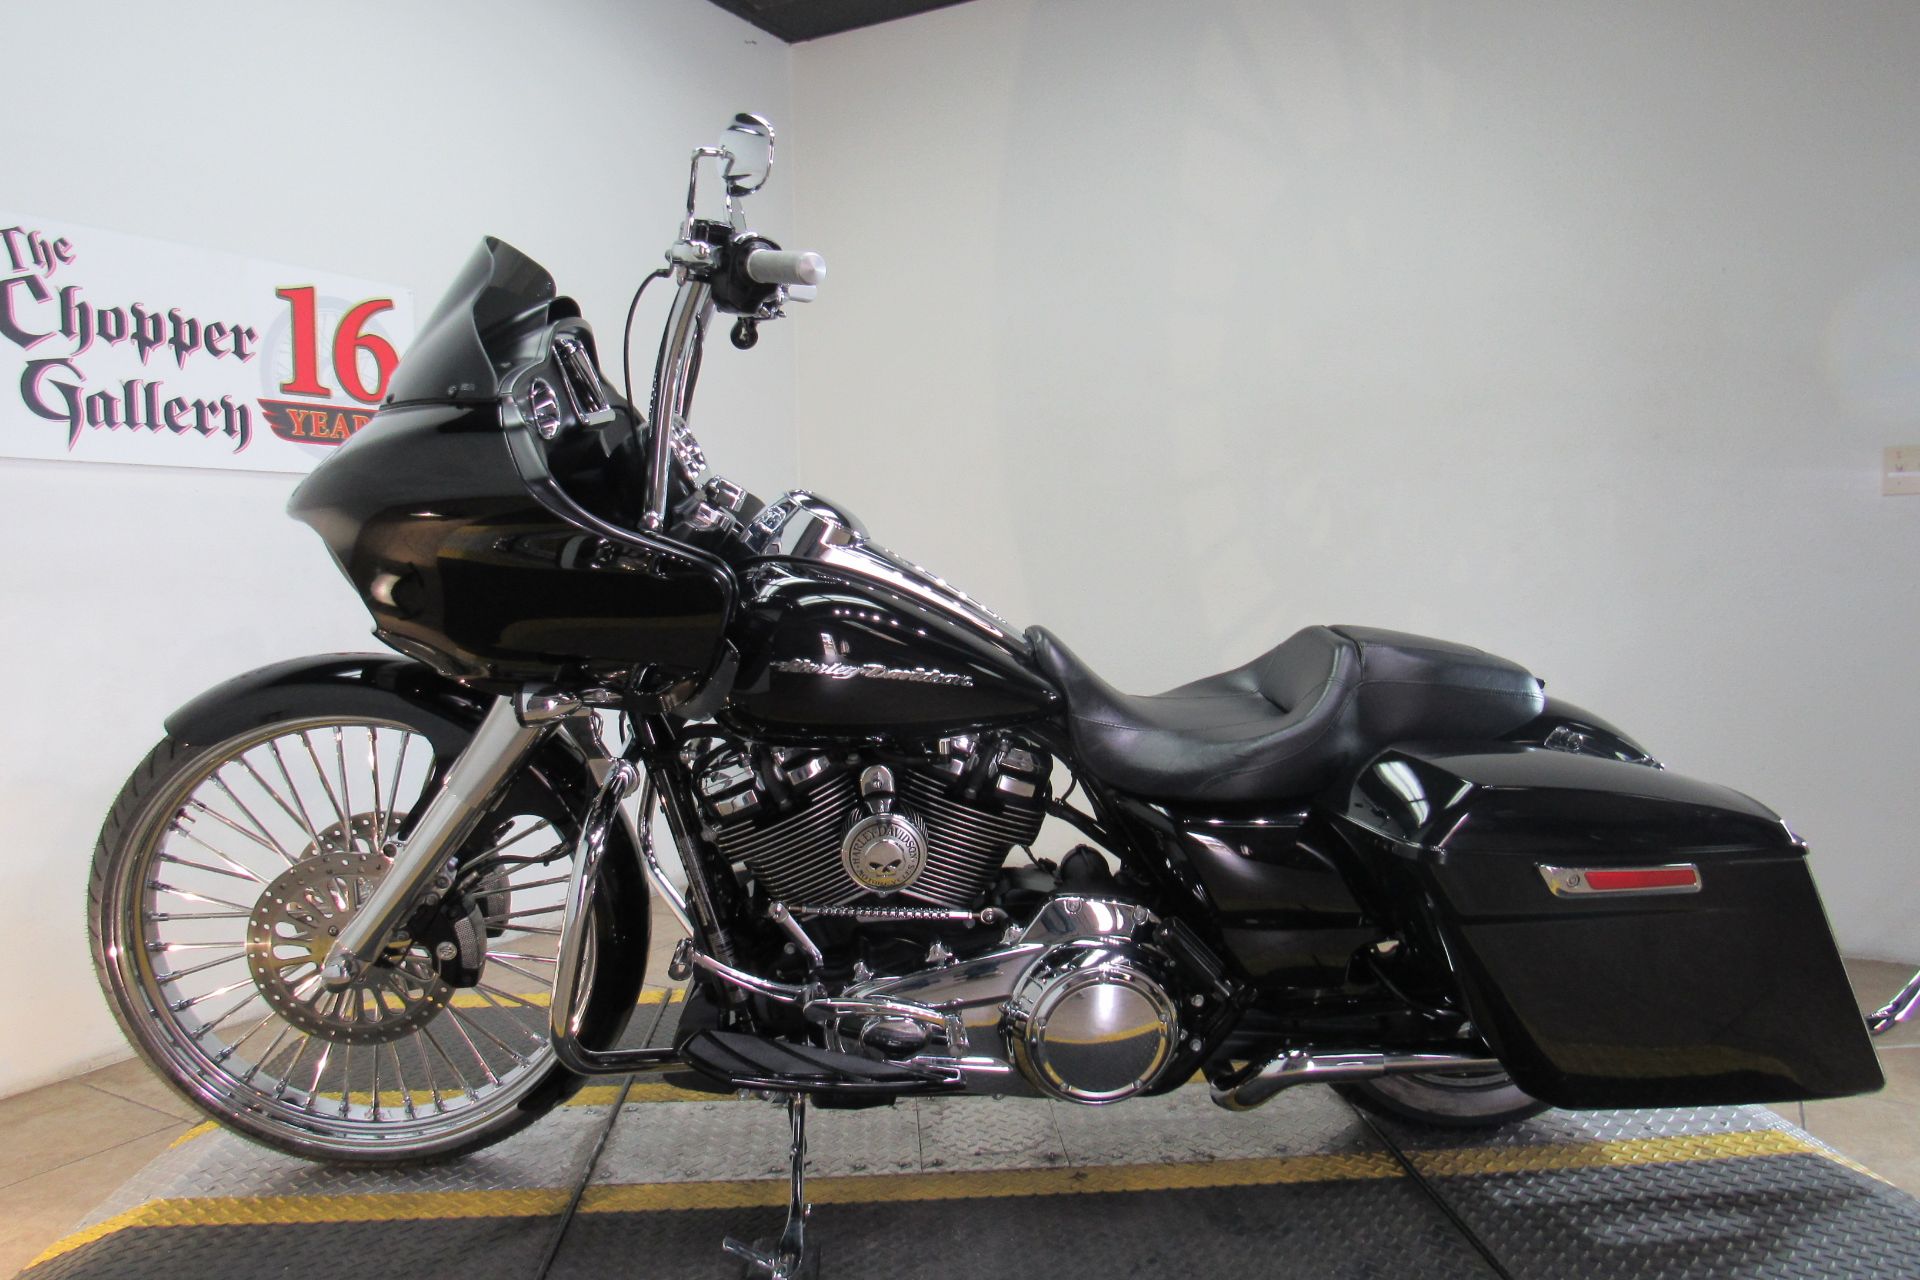 2020 Harley-Davidson Road Glide® in Temecula, California - Photo 15